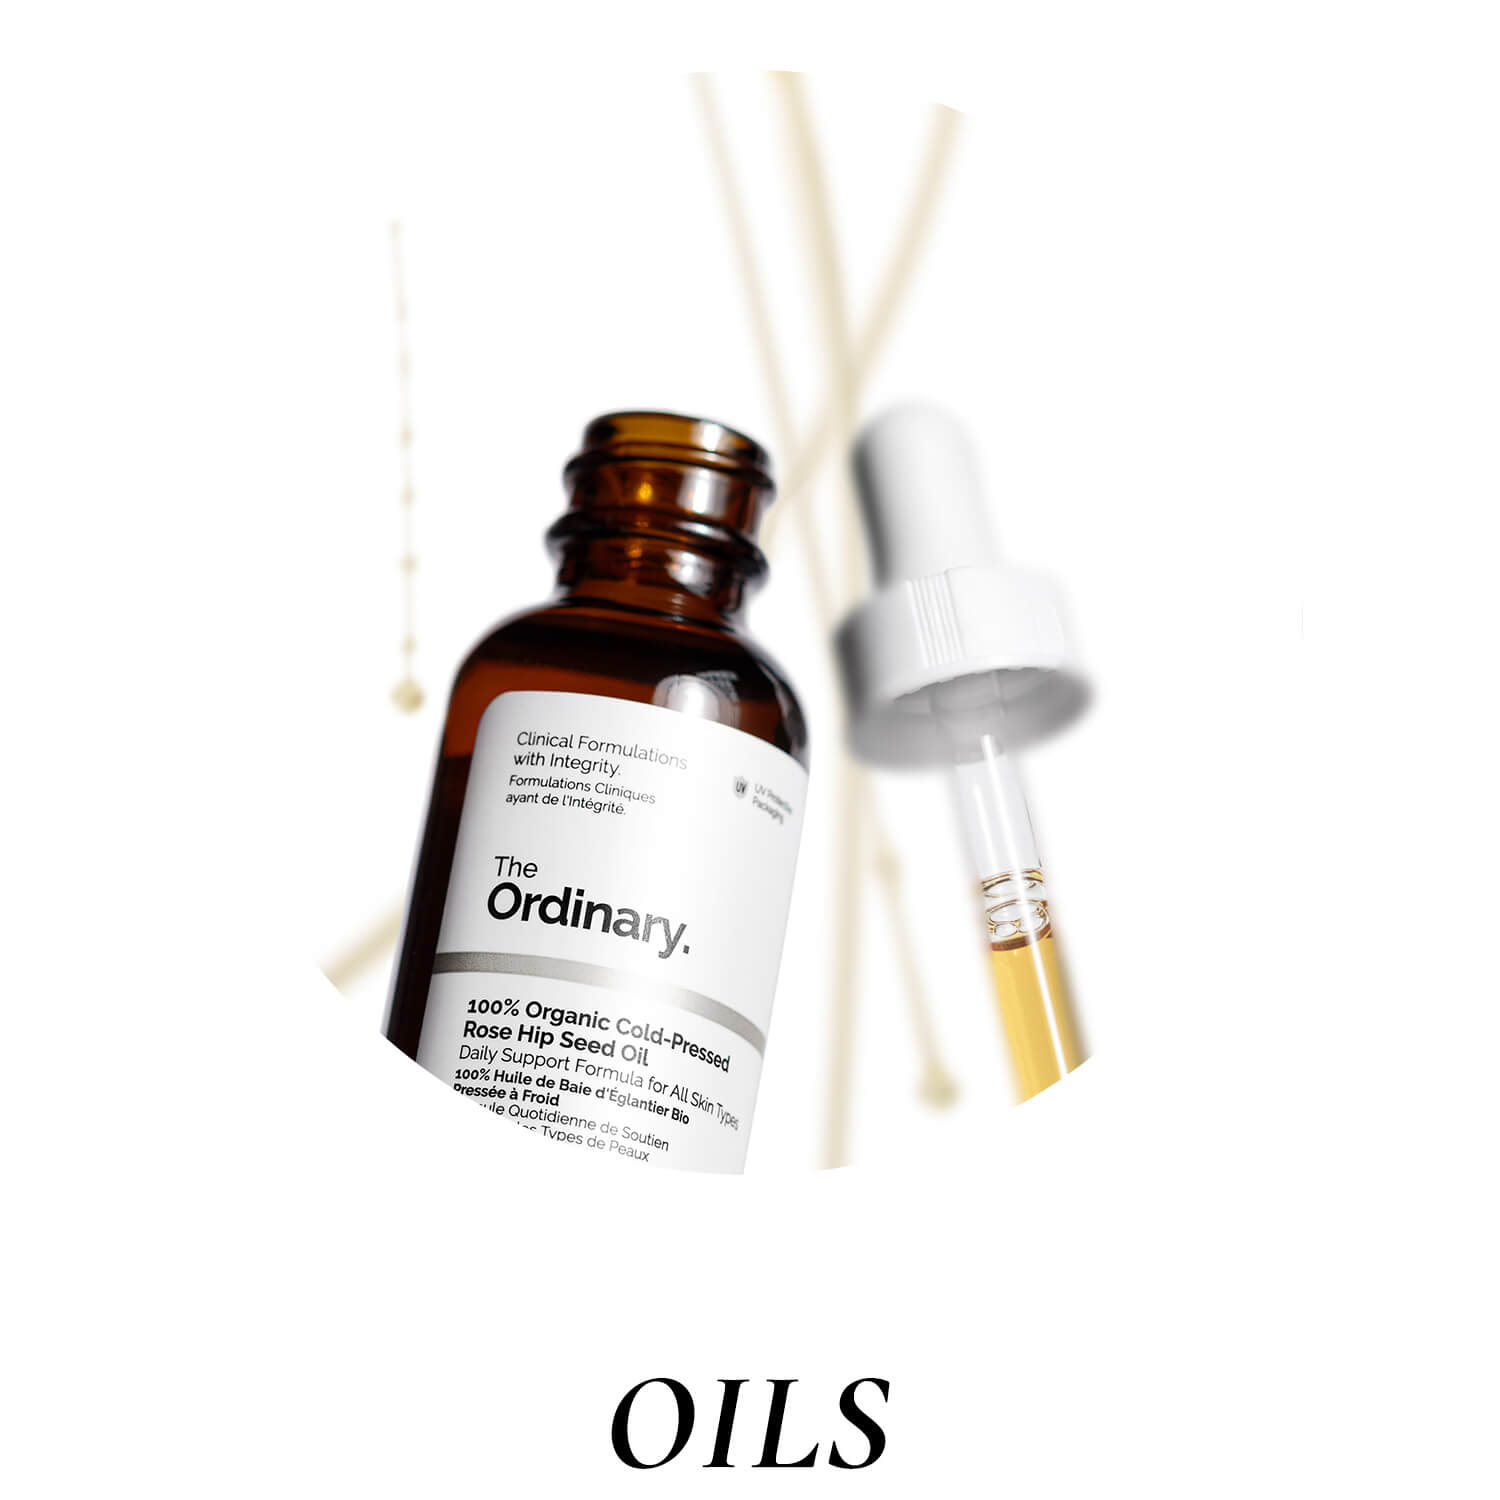 The Ordinary oils